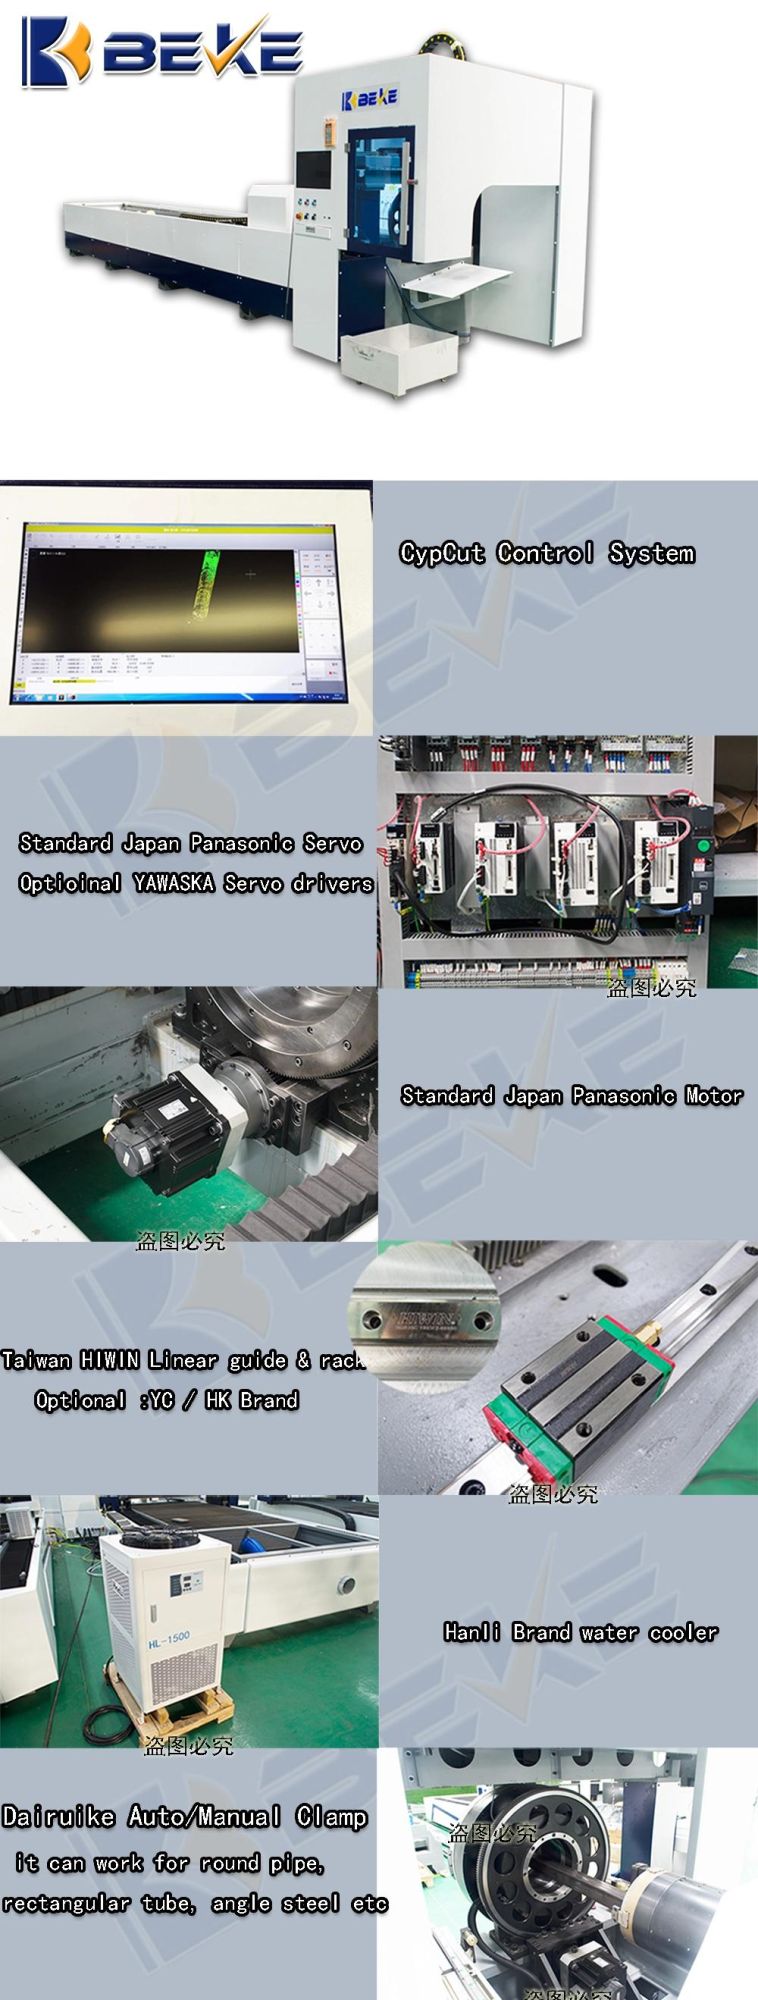 Bk 6012 Carbon Steel Sheet Tube CNC Fiber Laser Cutting Machine Sale Online